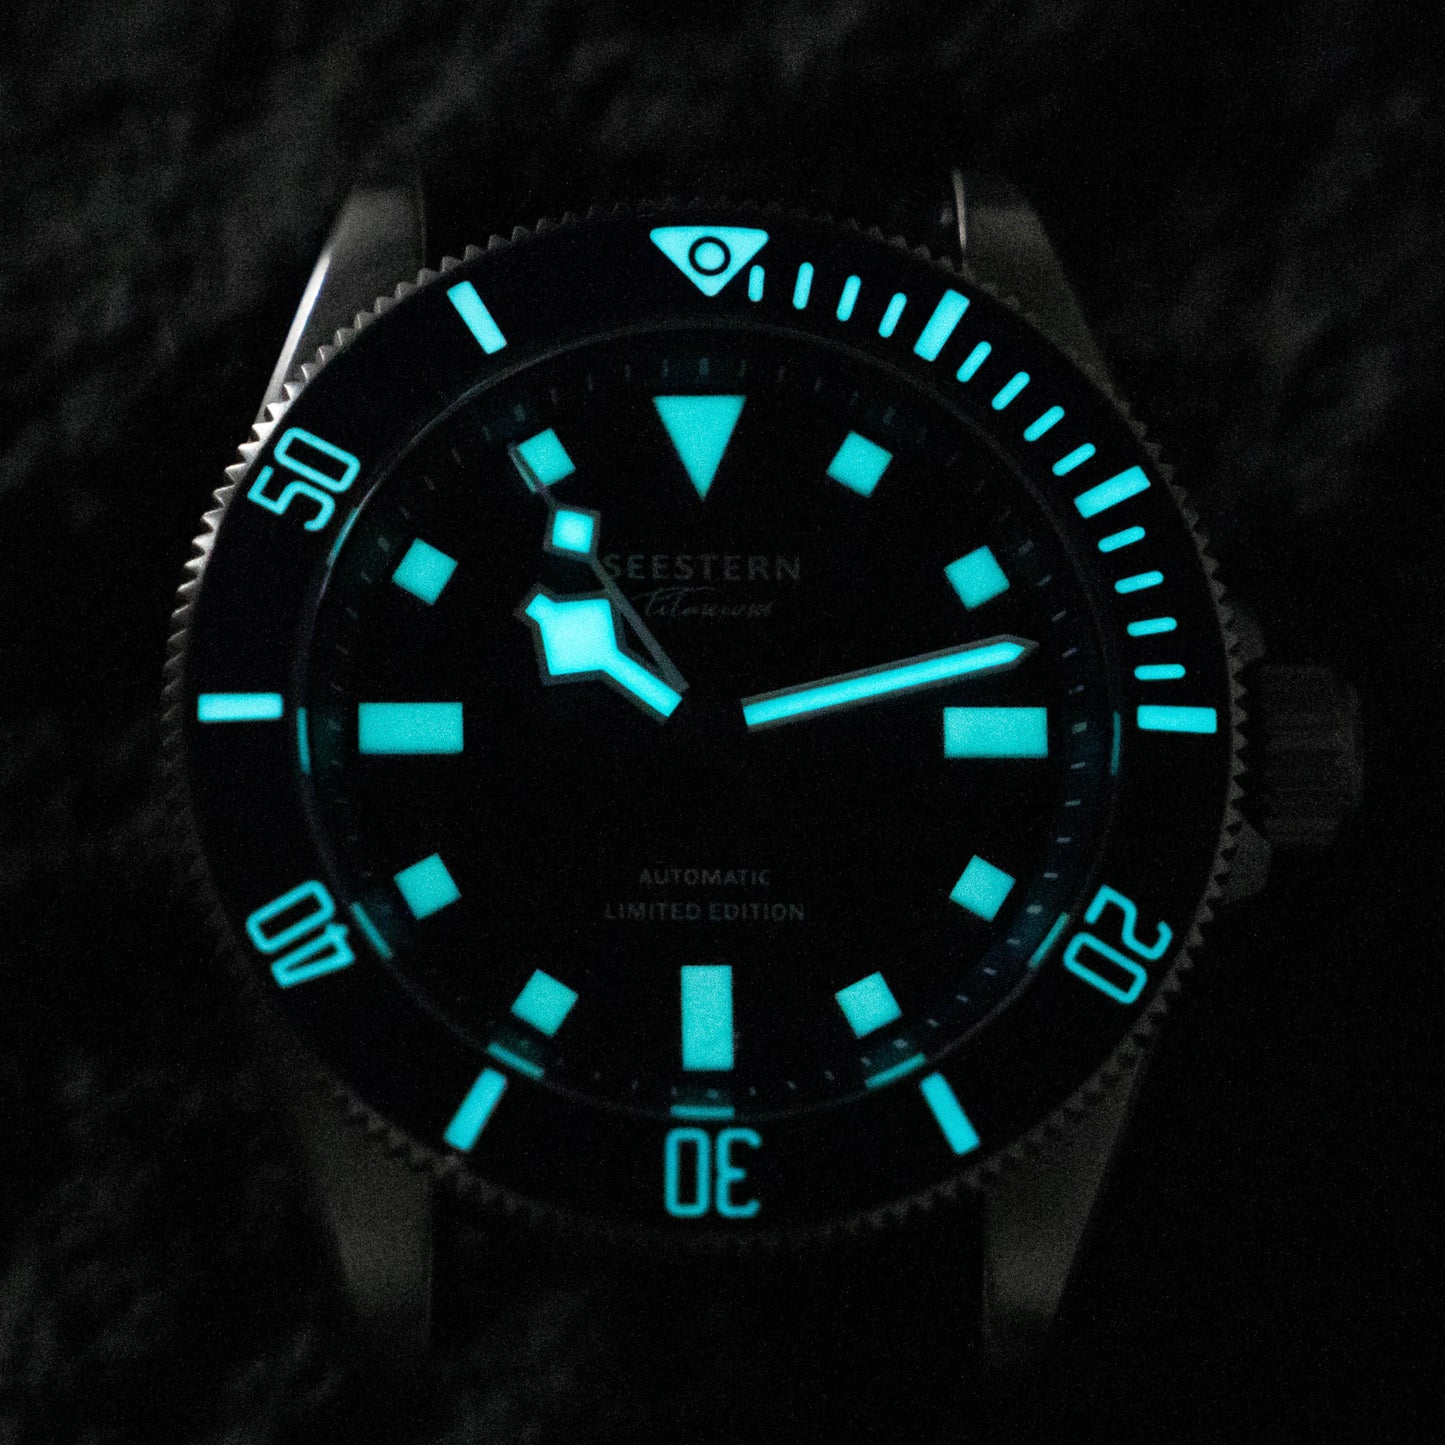 Seestern 430 Titanium Professional Diver (Seiko NH38 movement)